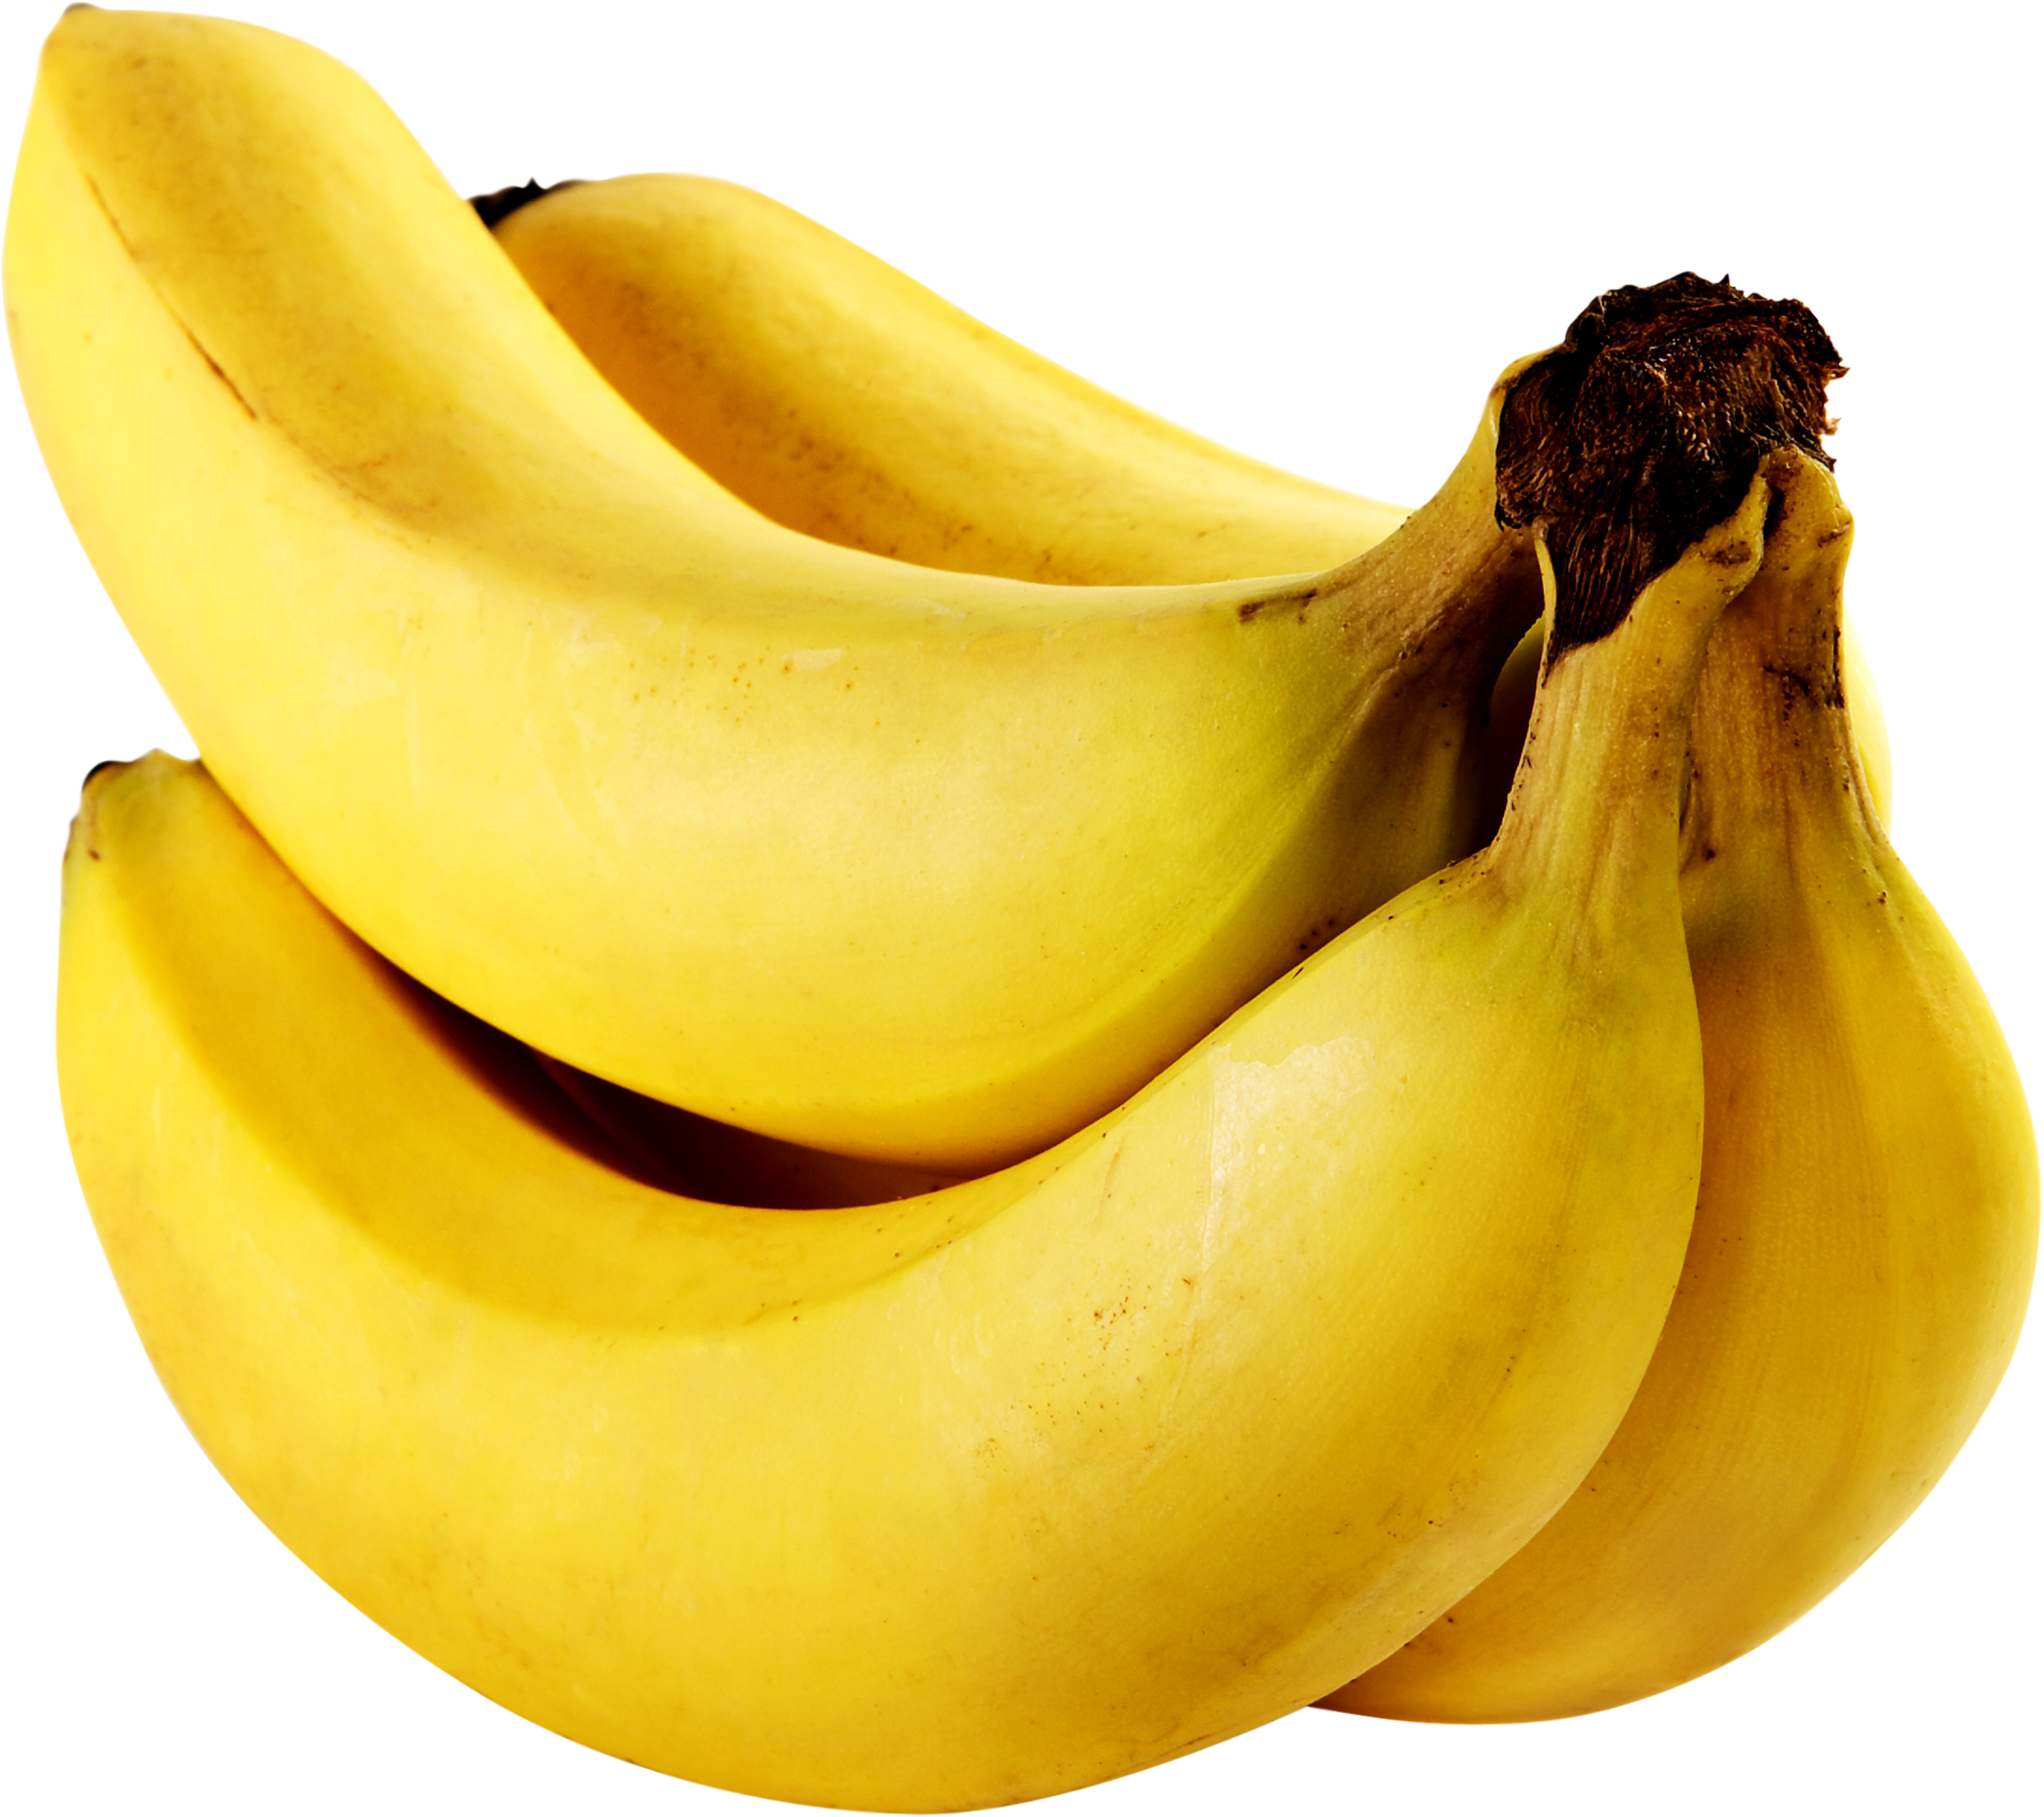 Png image free picture. Bananas clipart 3 banana